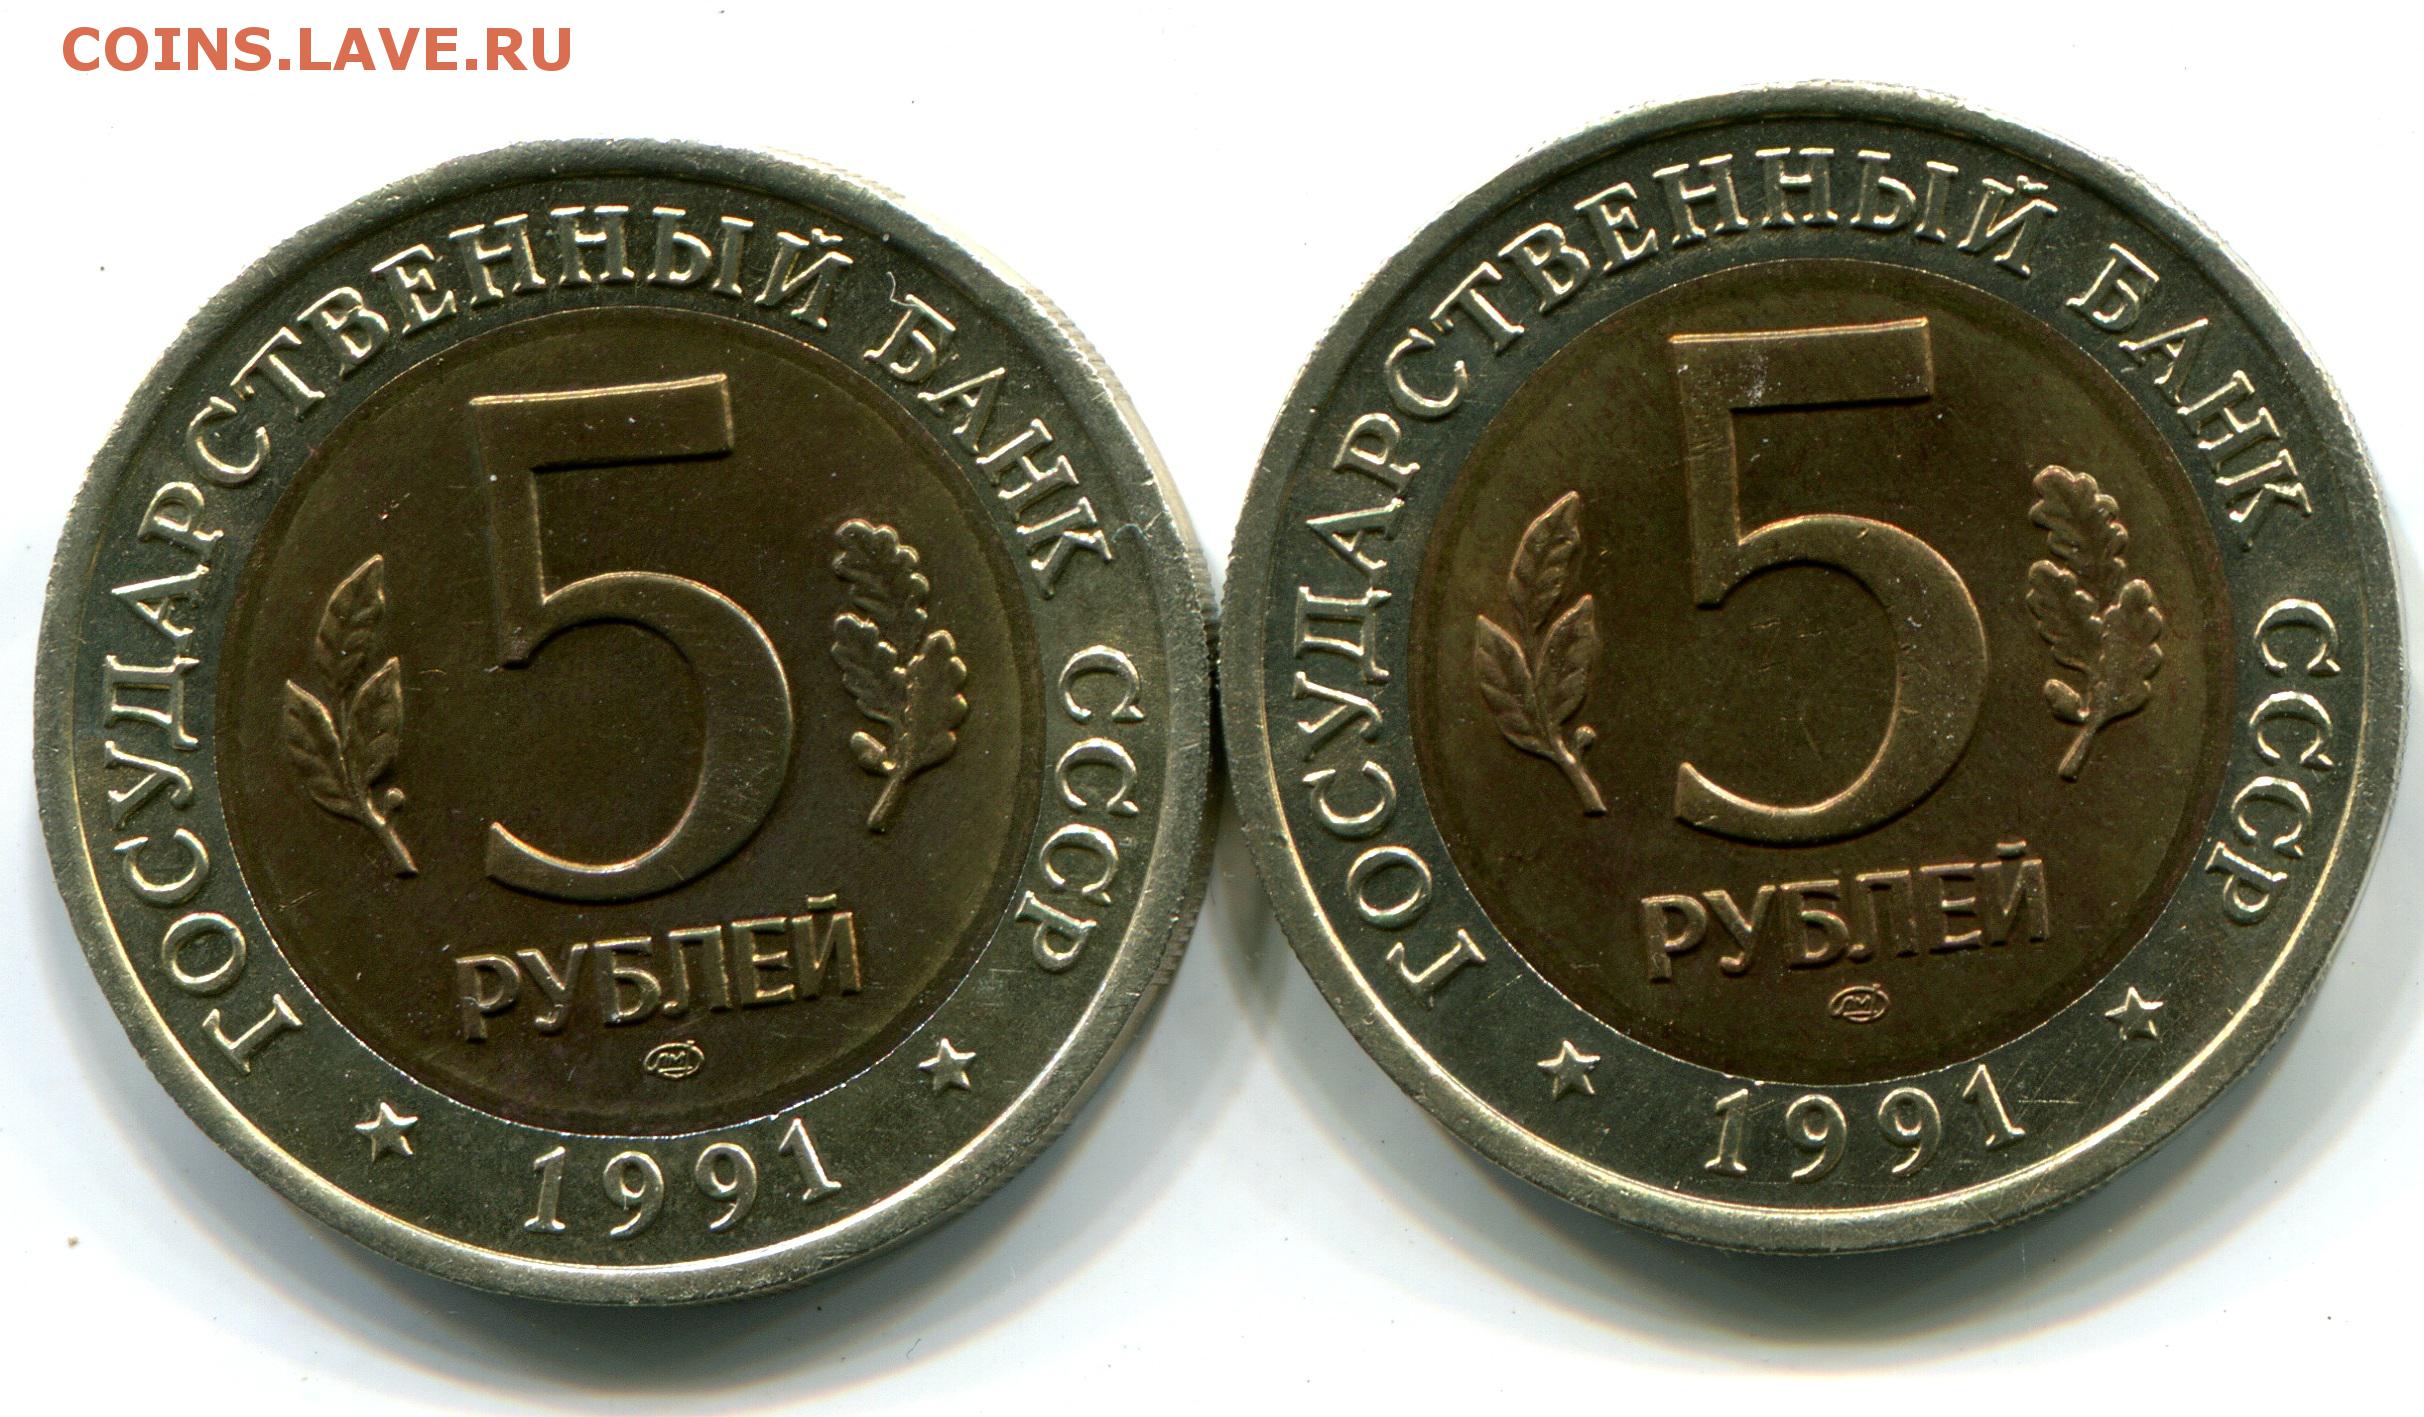 5 рублей красное. Красная книга 5 рублей. Красная книга с 1991 по 1994 раскраска монеты.